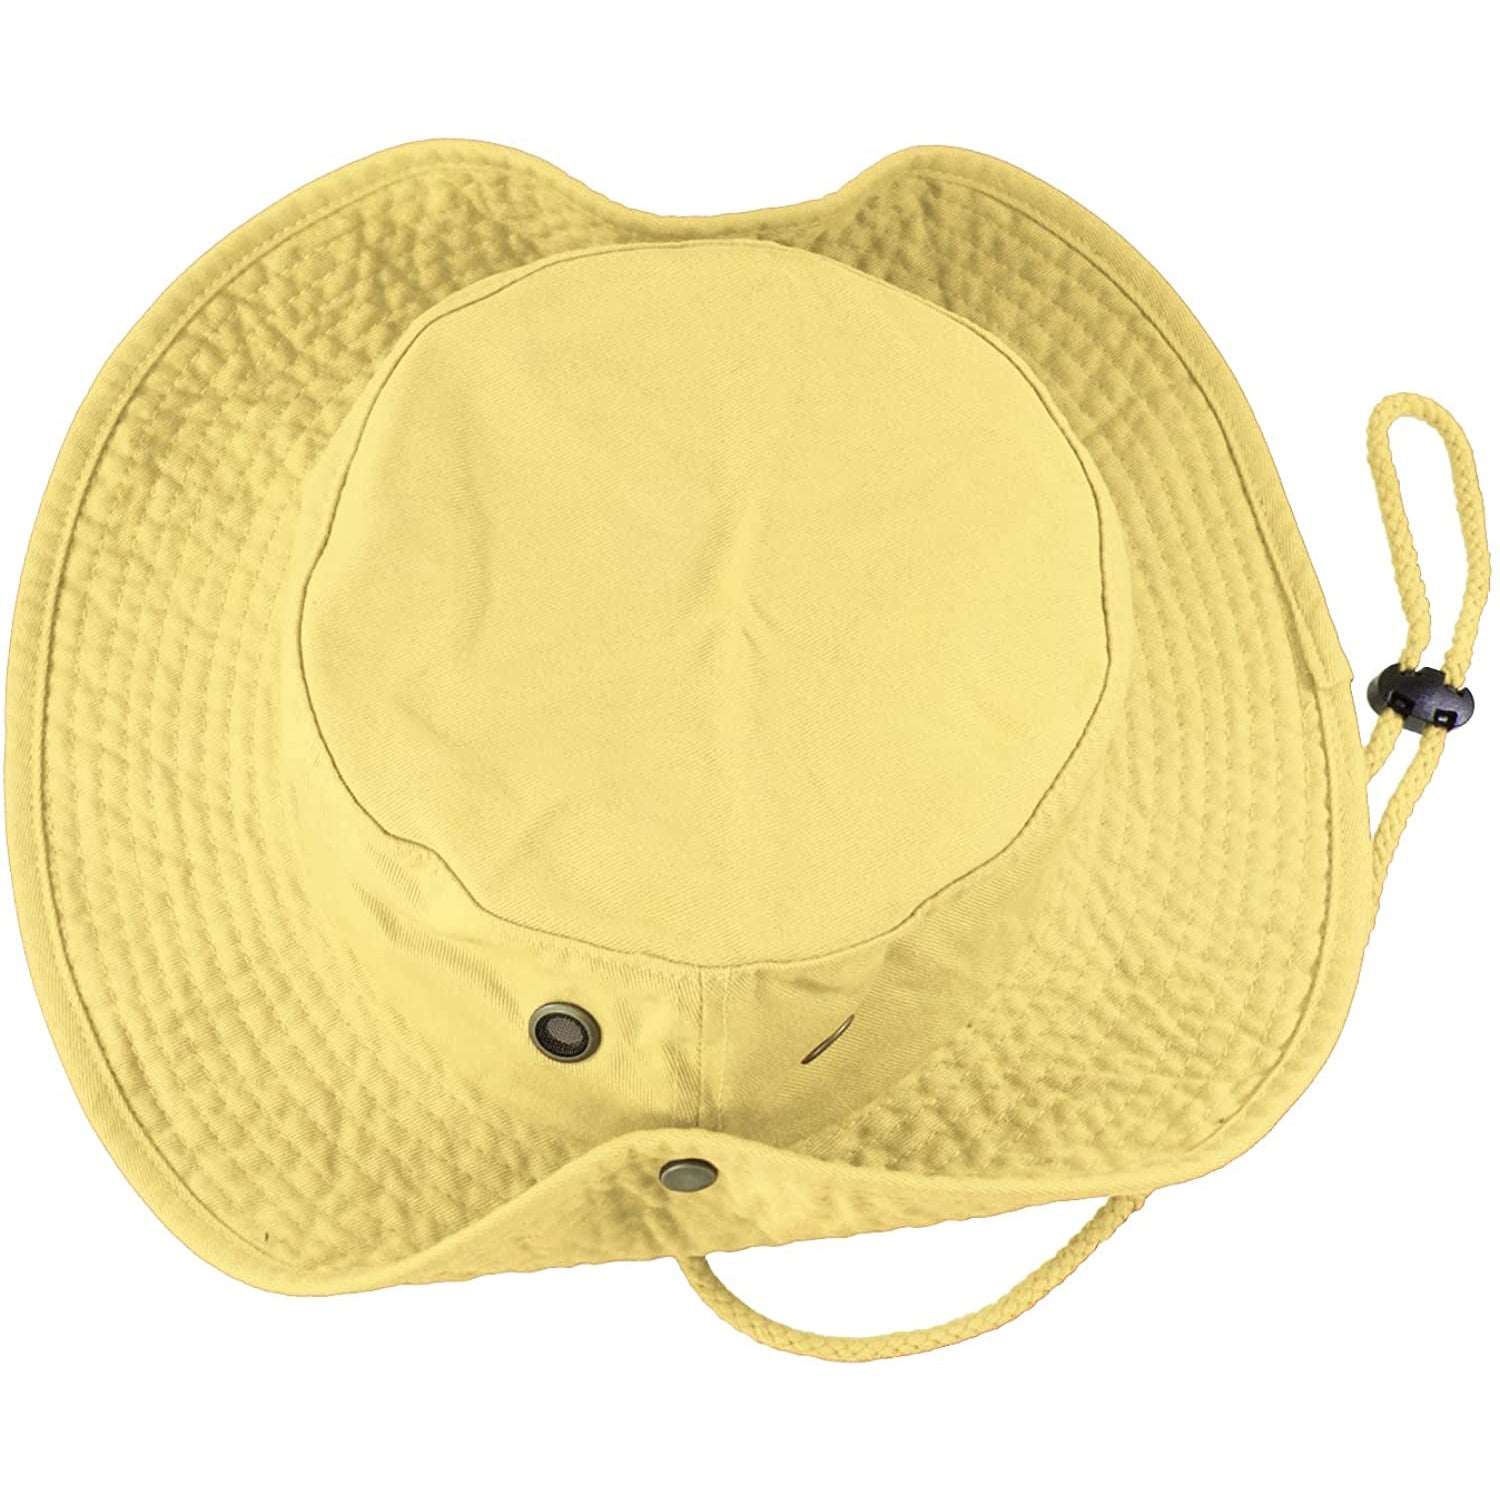 TOPONE ACCESSORIES LIMITED Custom Bucket 100% Cotton Washed Safari Booney Sun Hats Topone Accessories Ltd. 